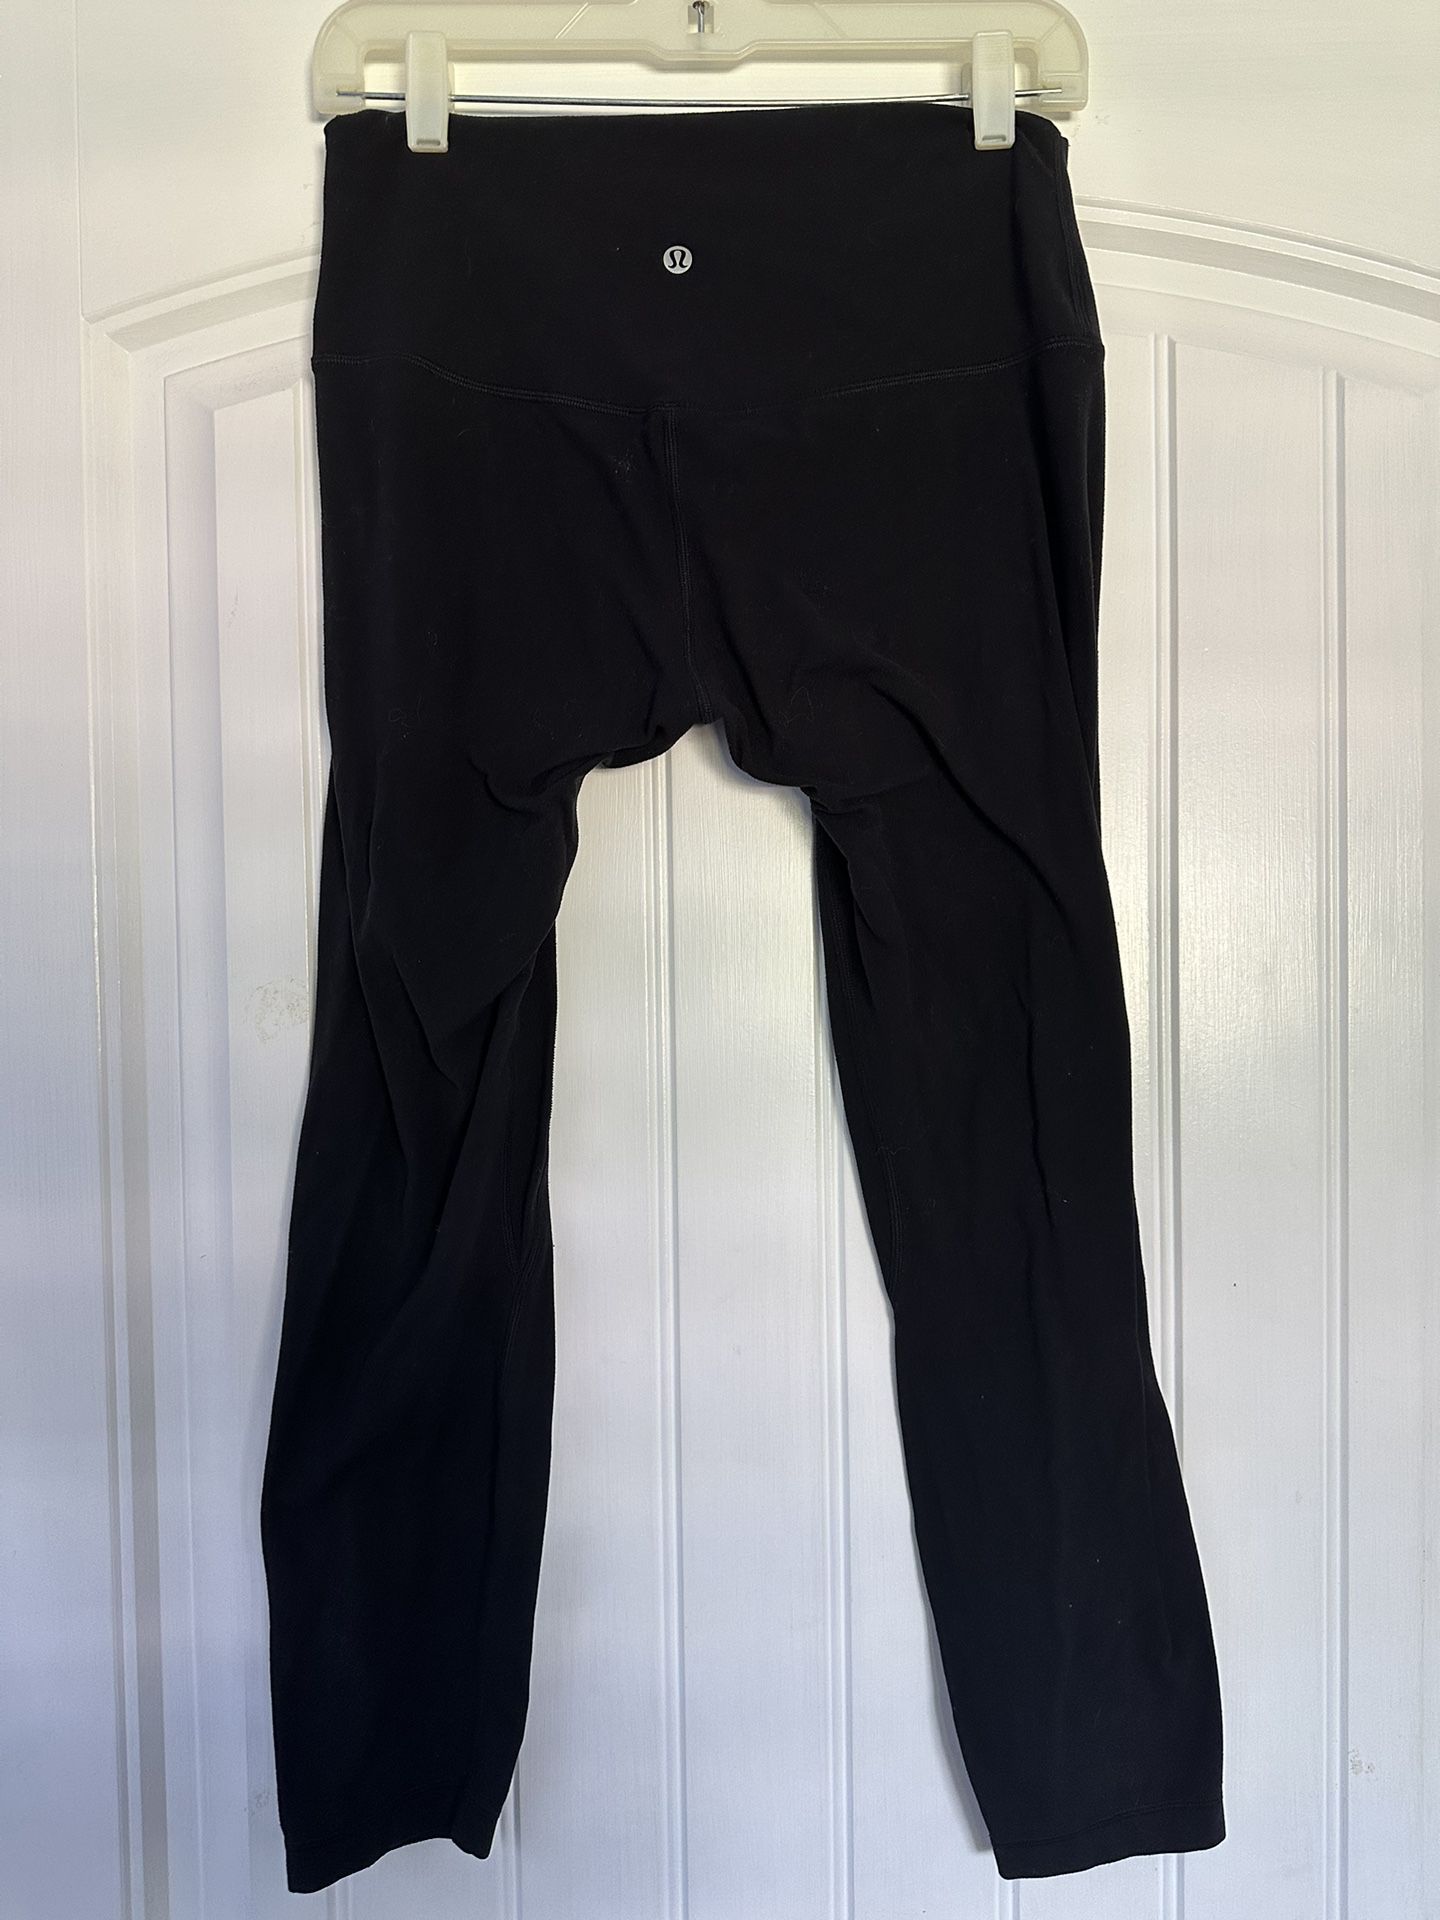 lululemon Black leggings